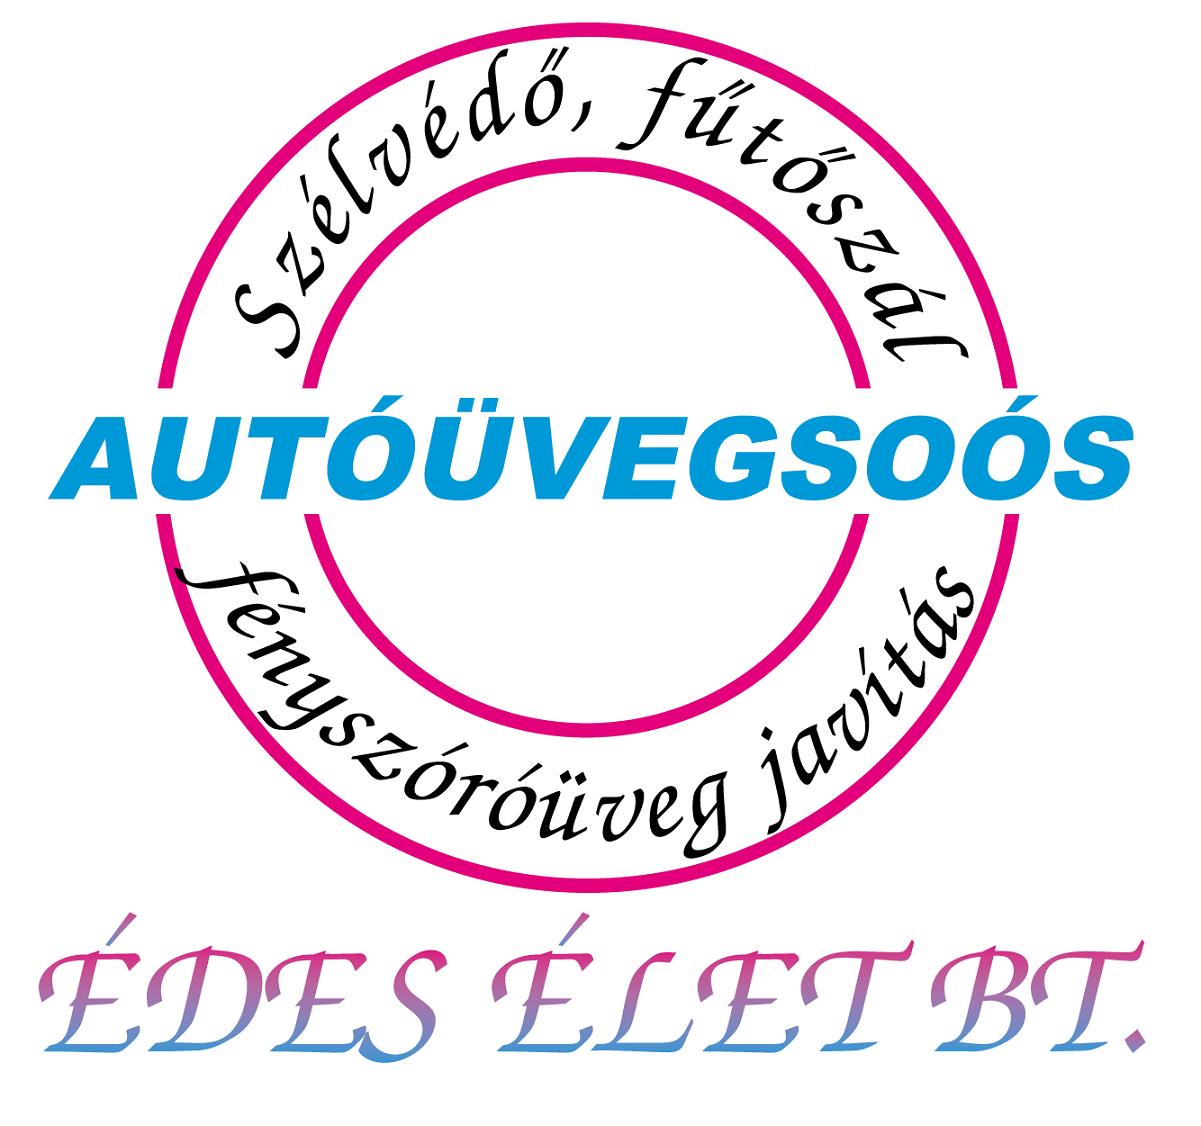 Autosuveg_soos_szelvedo_banner